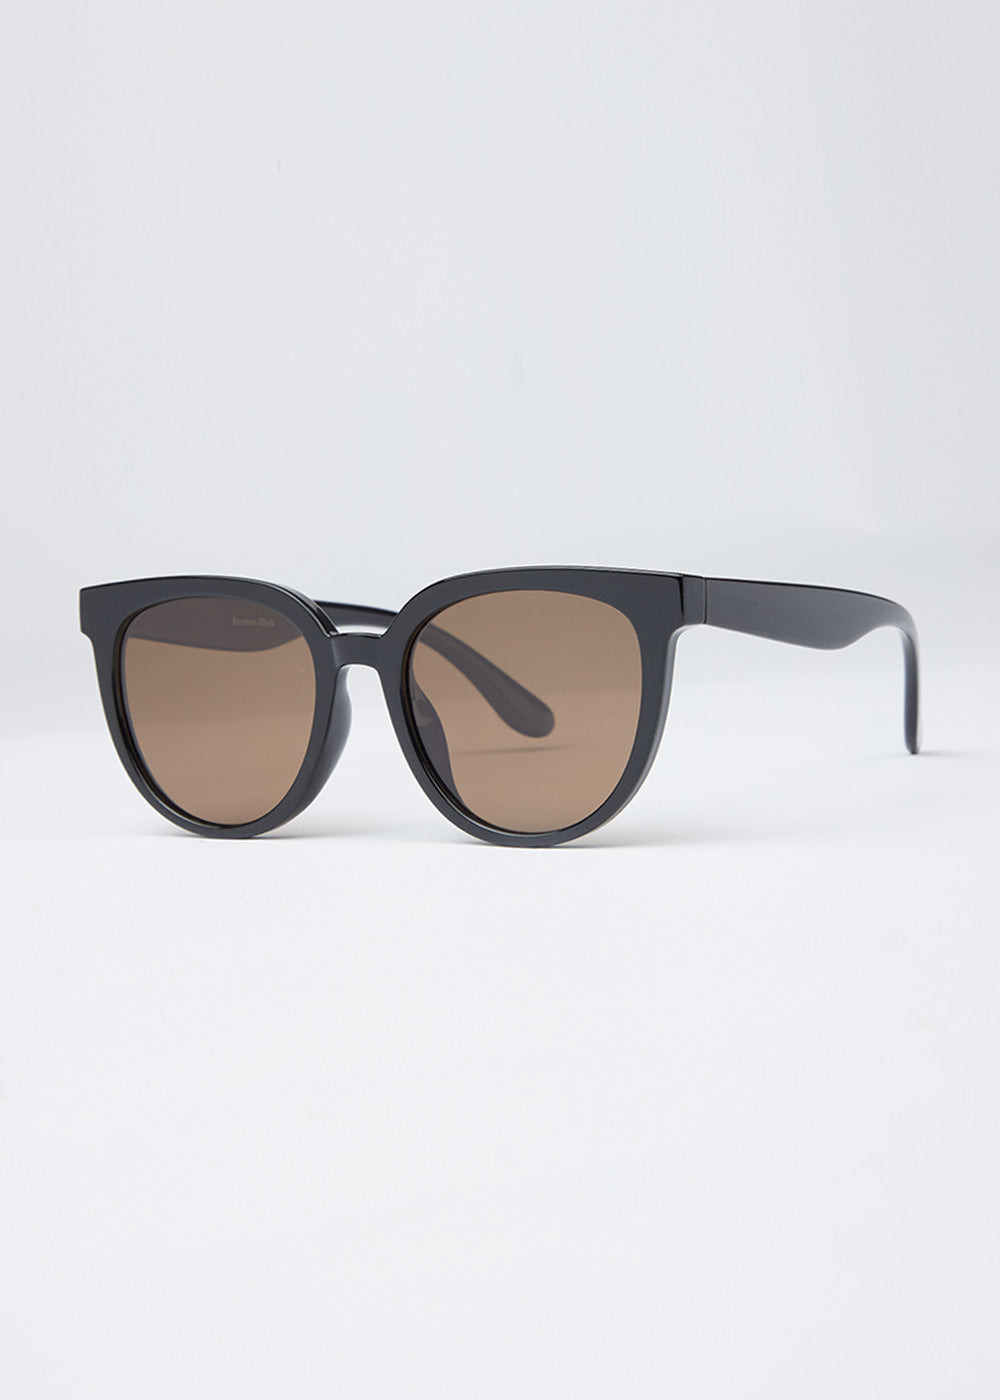 Light Brown Unisex Oval Sunglasses